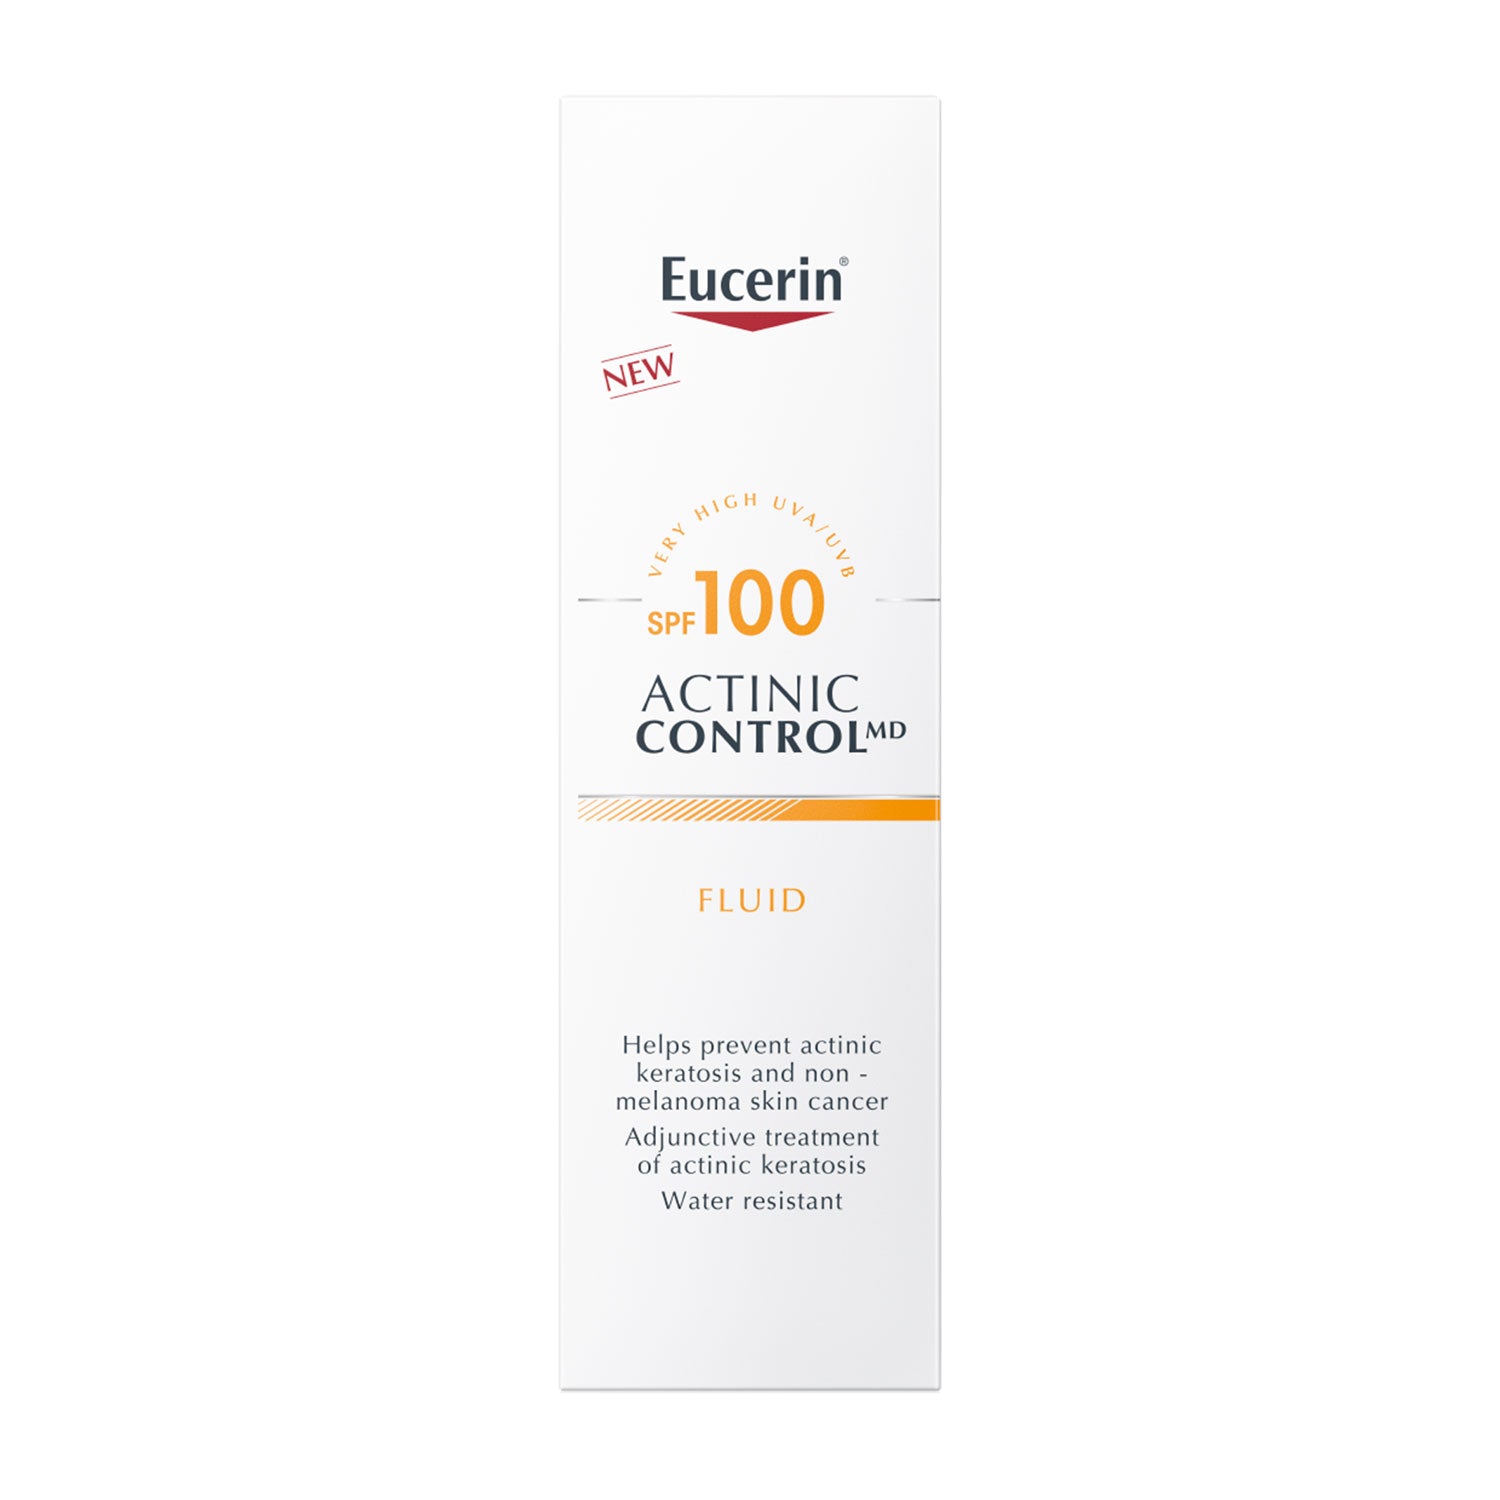 Eucerin Actinic Control MD SPF 100